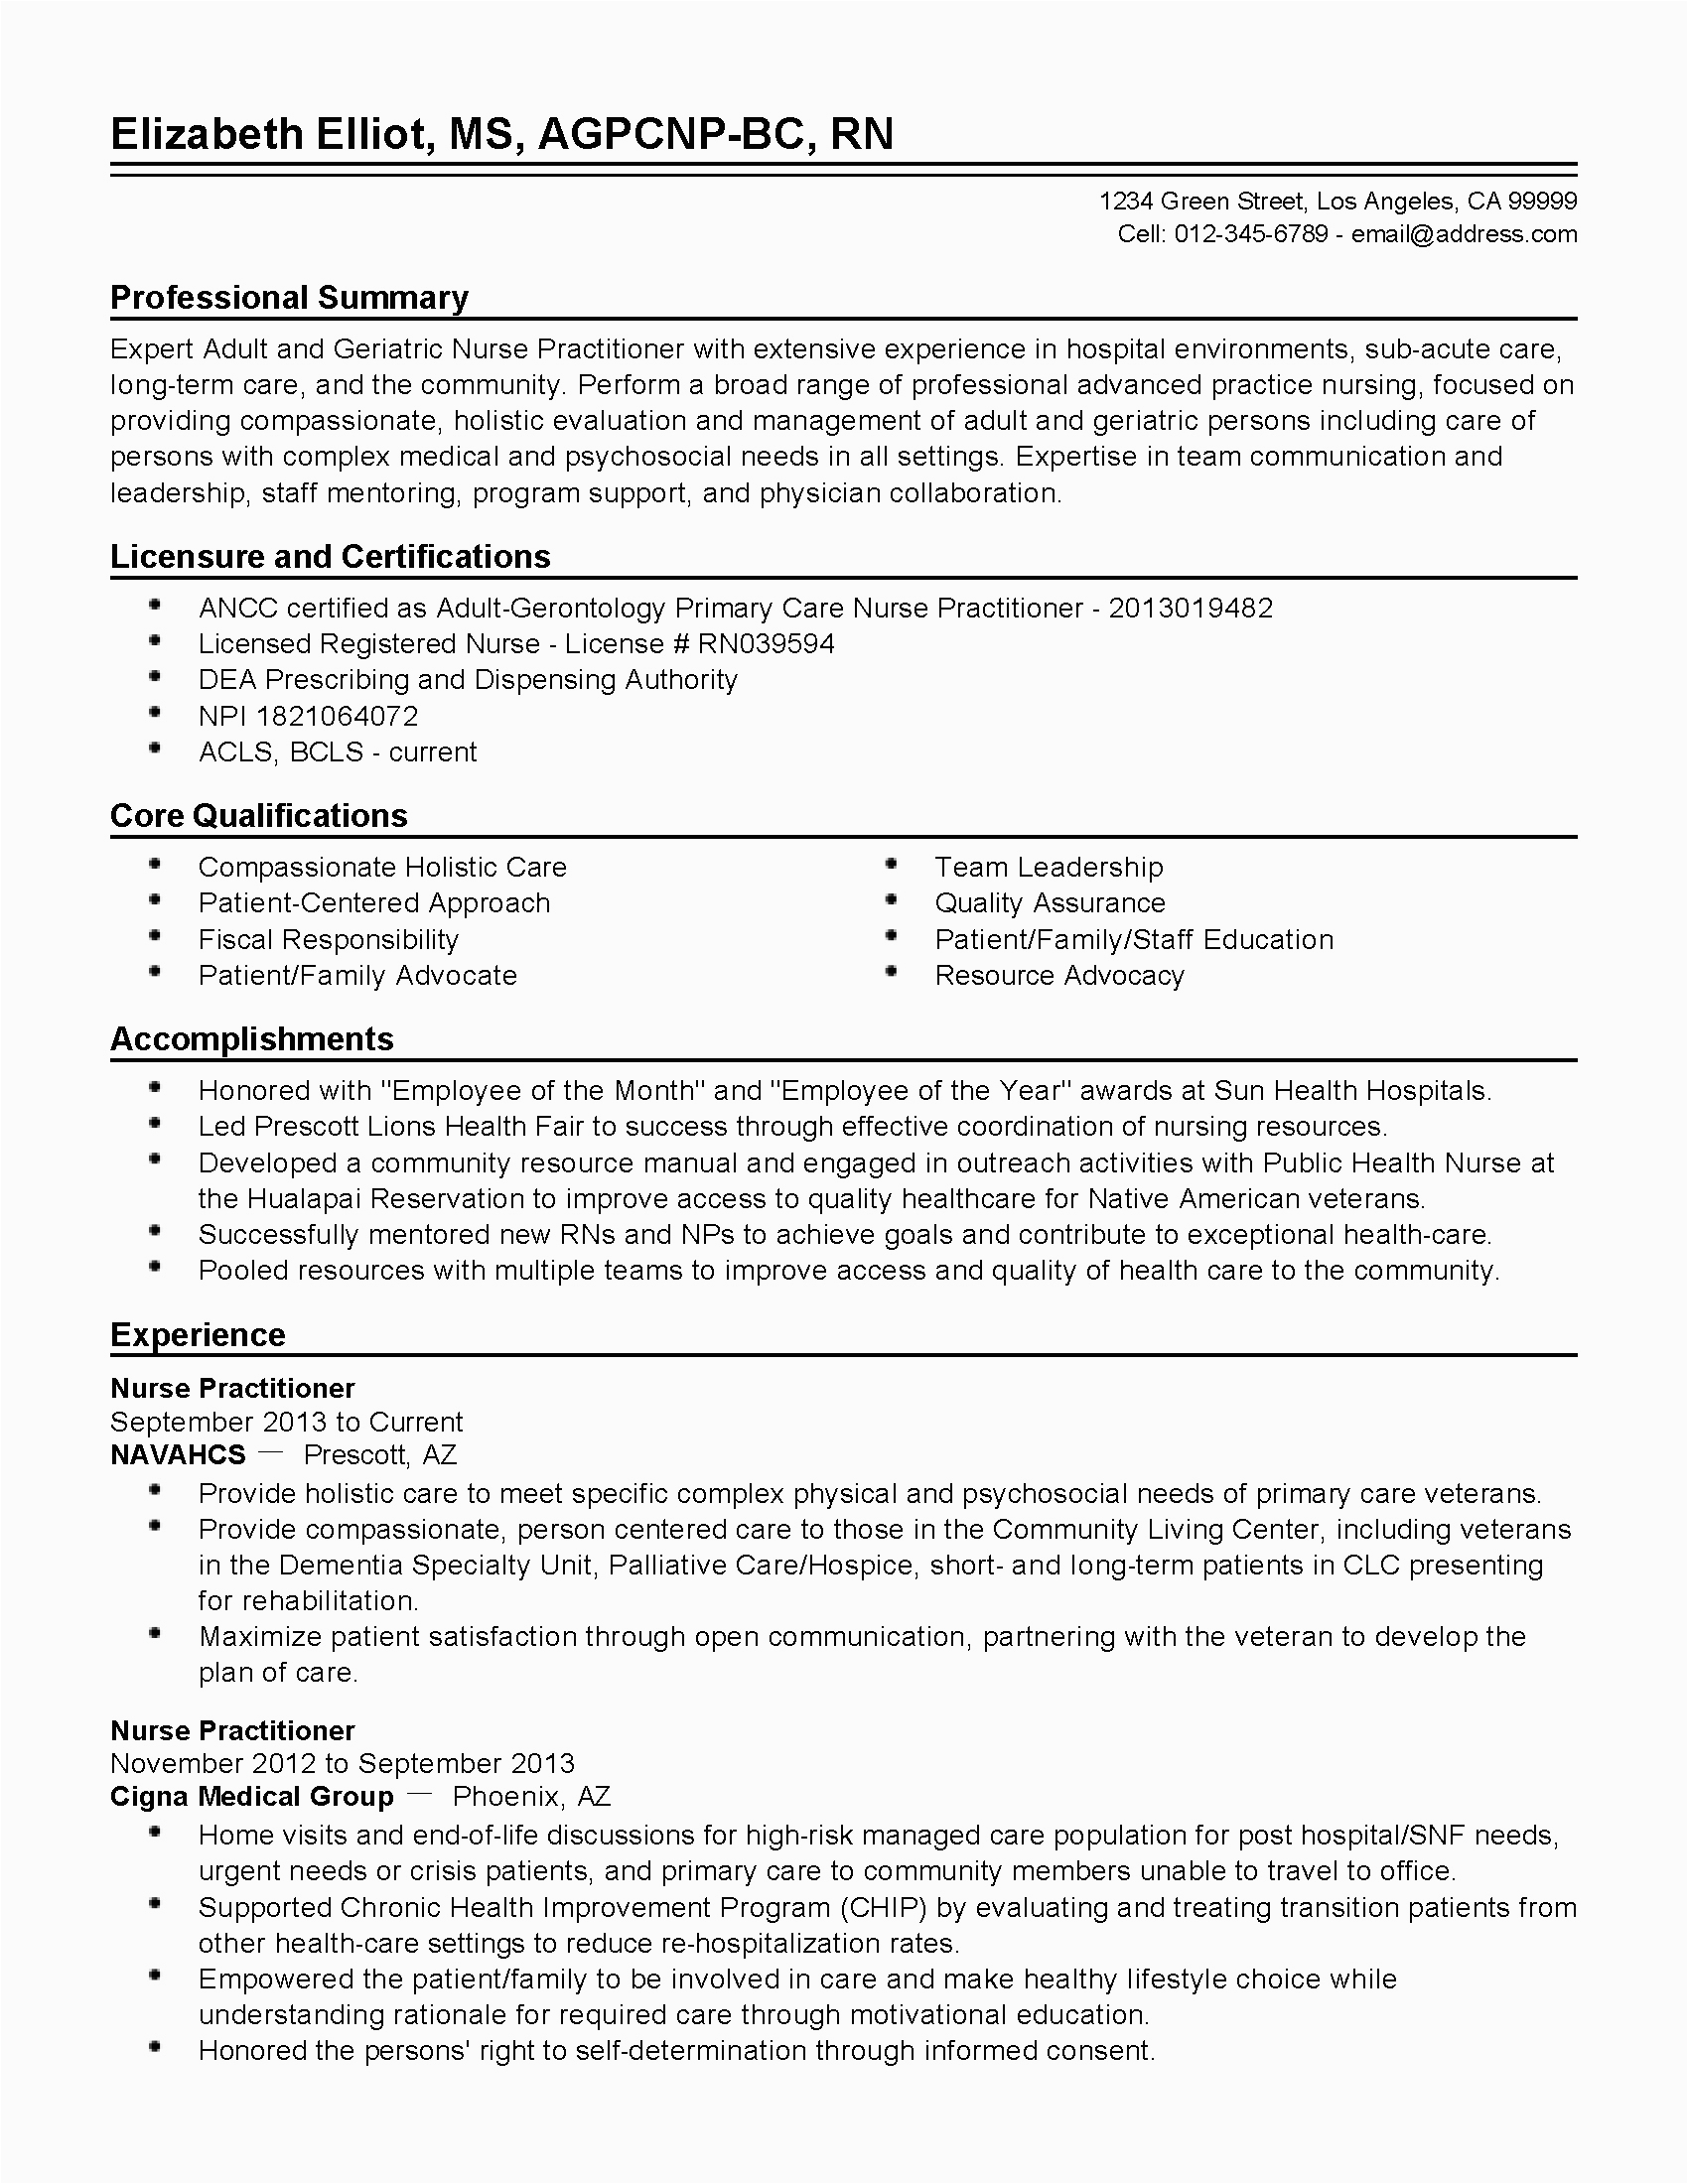 Sample Resume for New Graduate Nurse Practitioner Nurse Practitioner Resume New Graduate